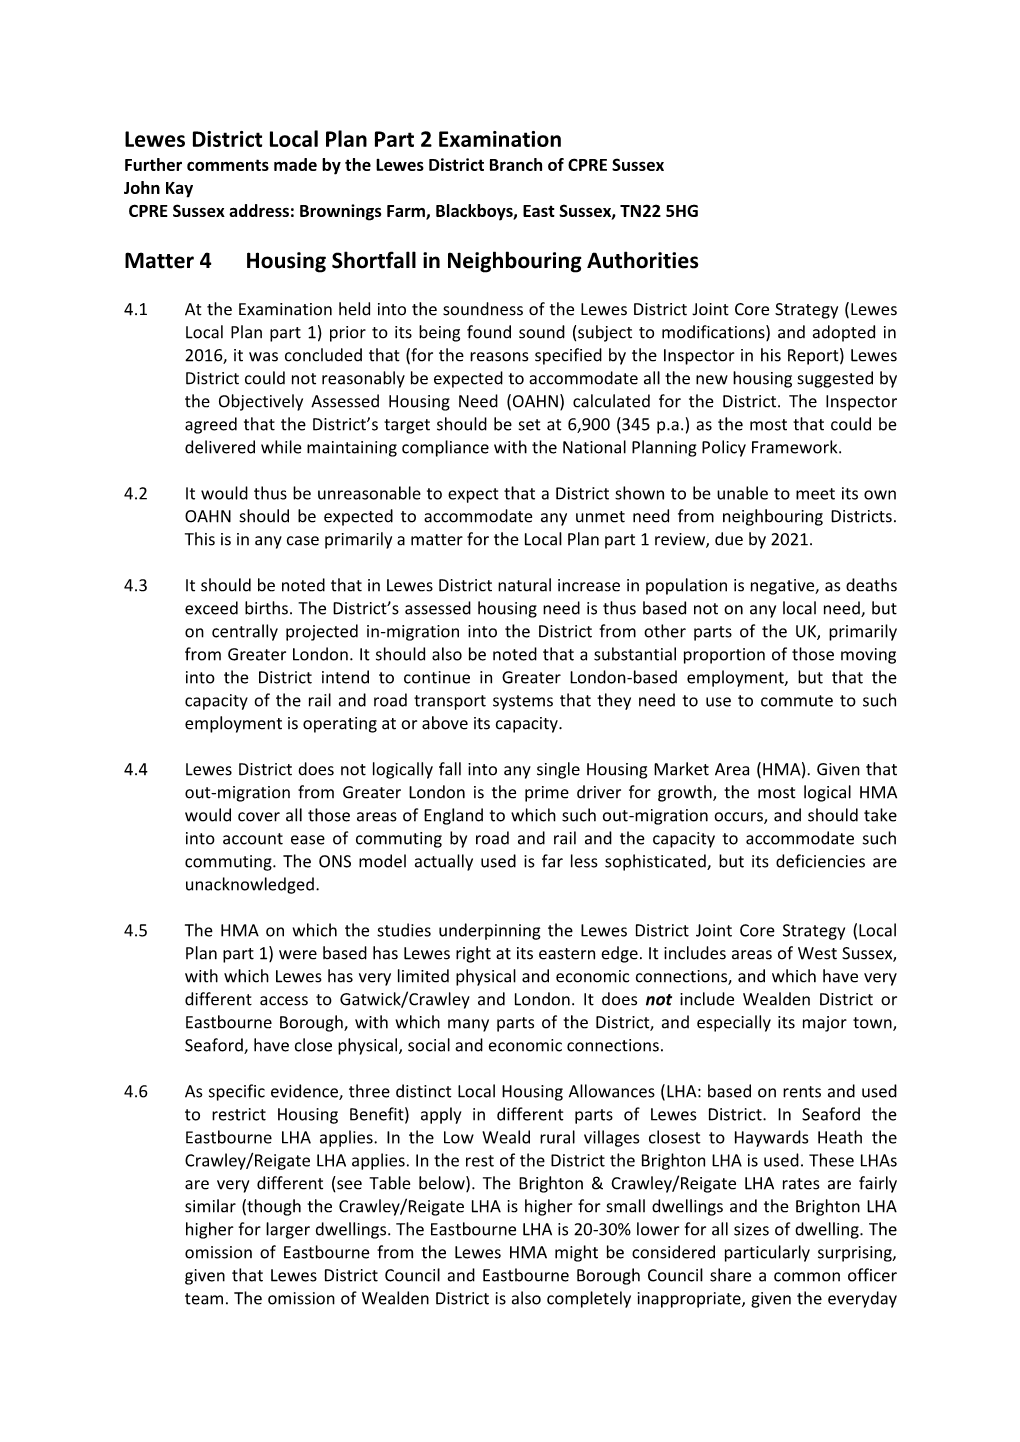 Lewes District Local Plan Part 2 Examination Matter 4 Housing